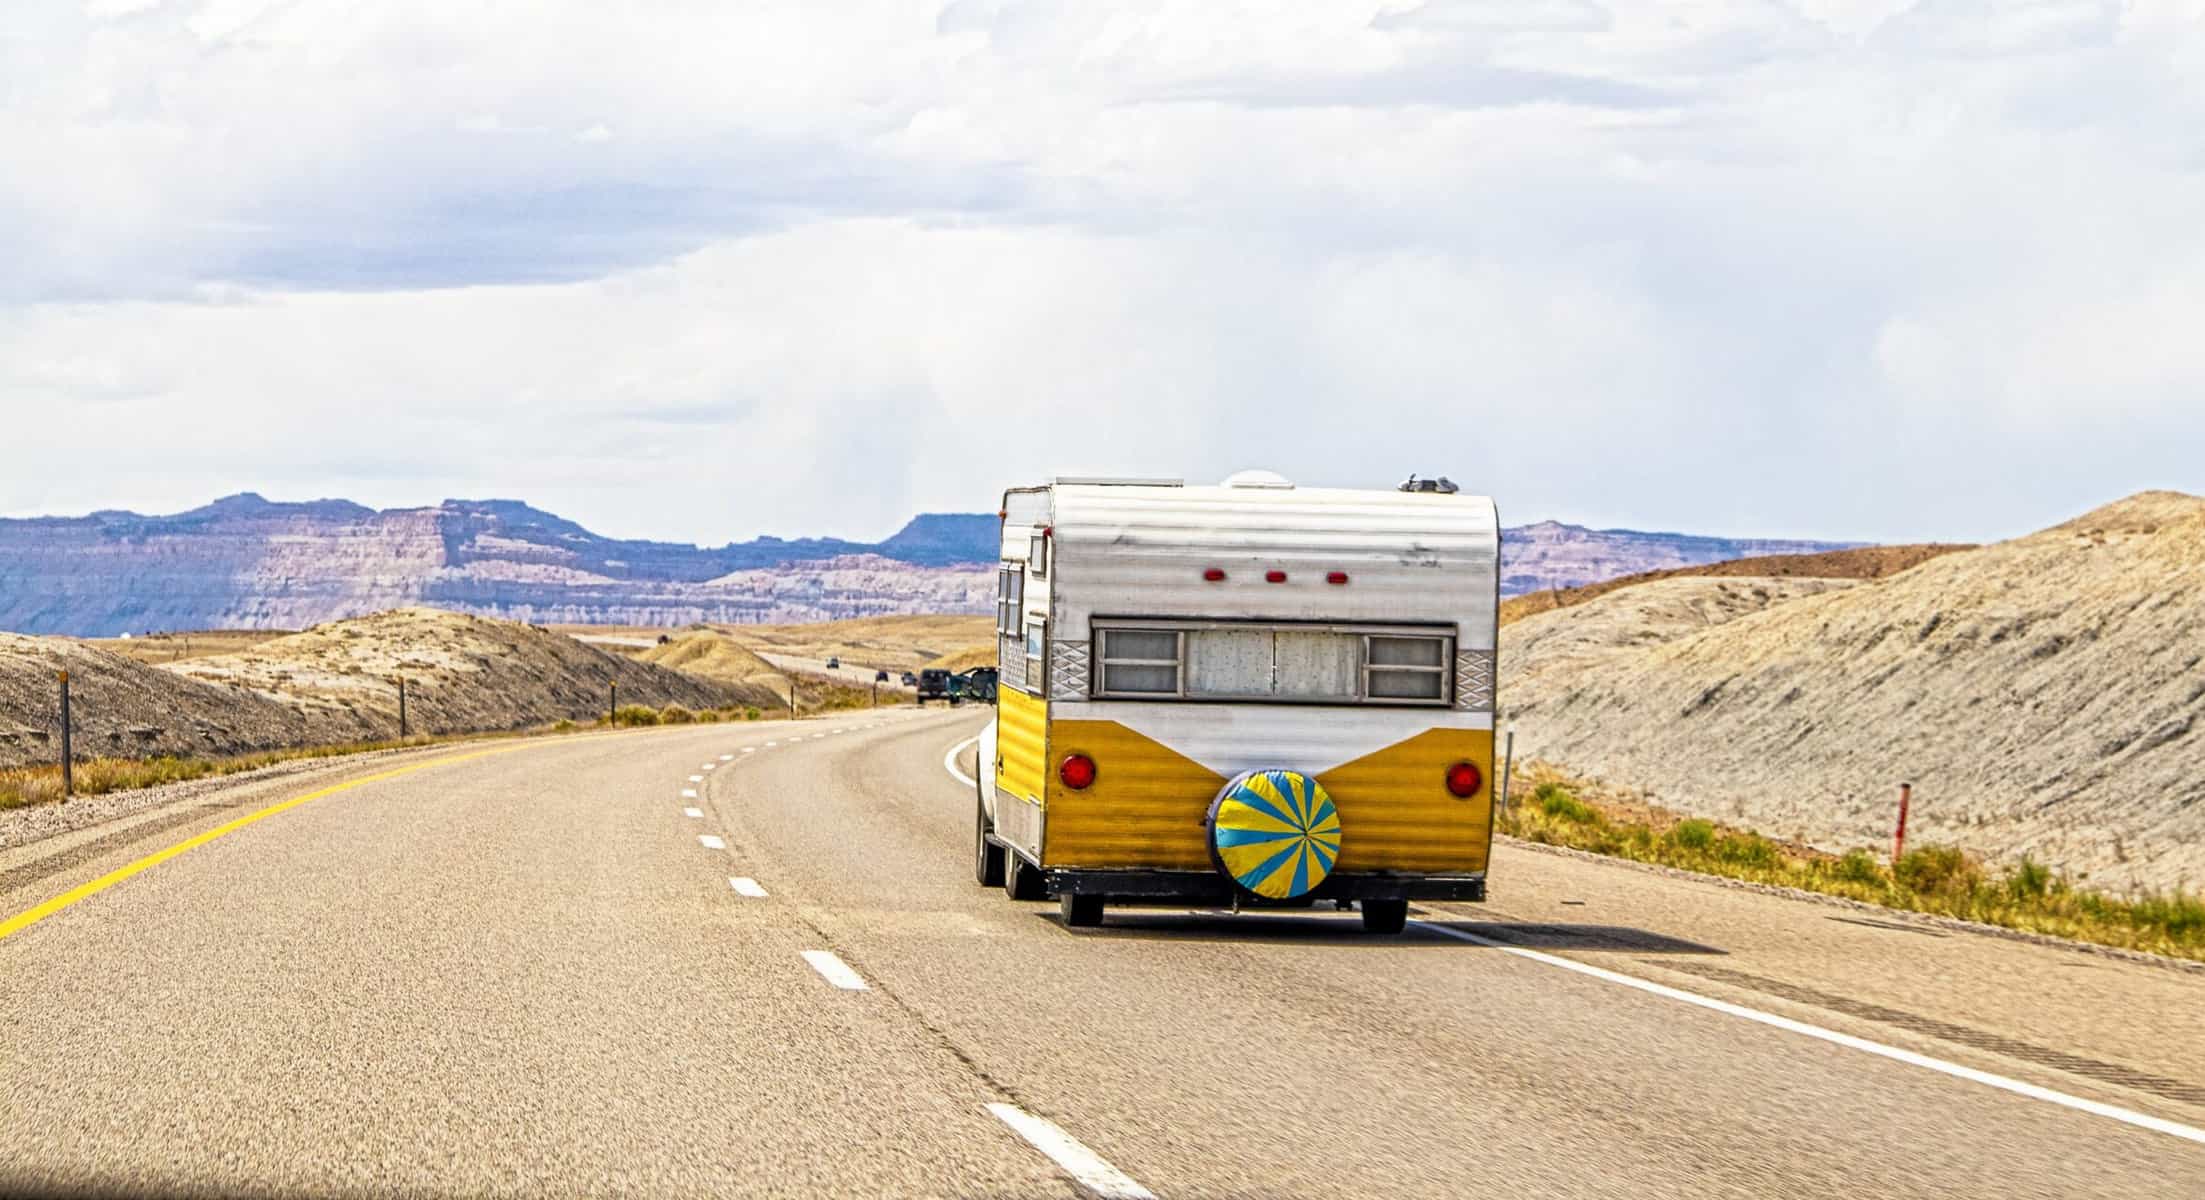 Retro camper trailer on the road (Image: Shutterstock)